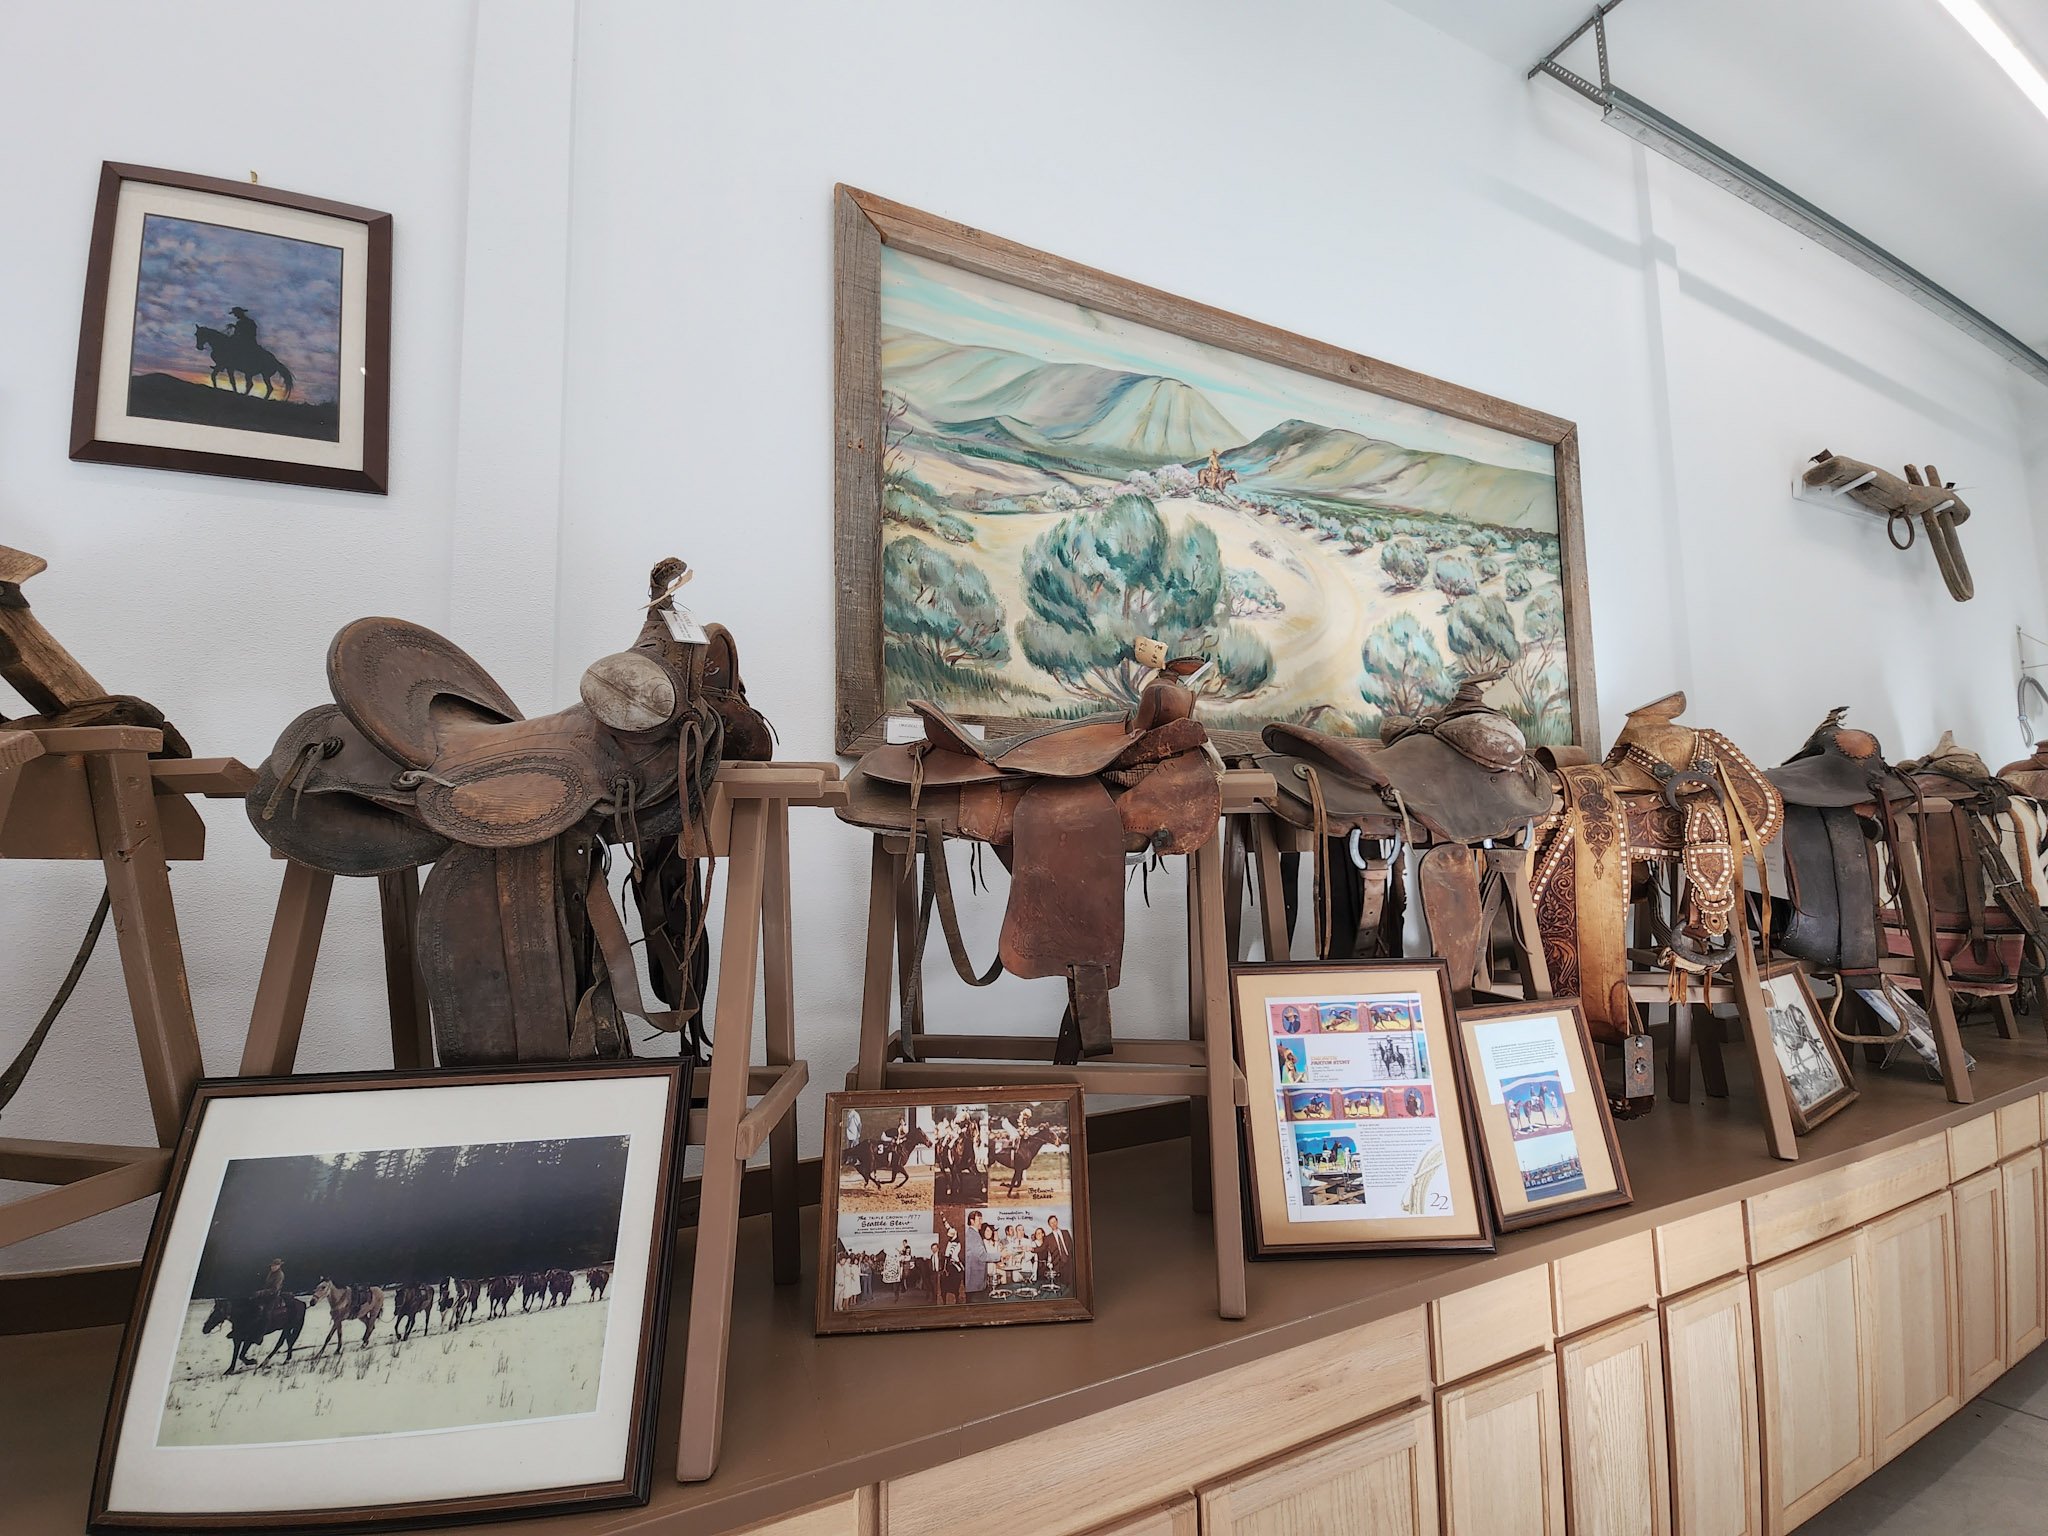 Saddles at Central Washington Agricultural Museum